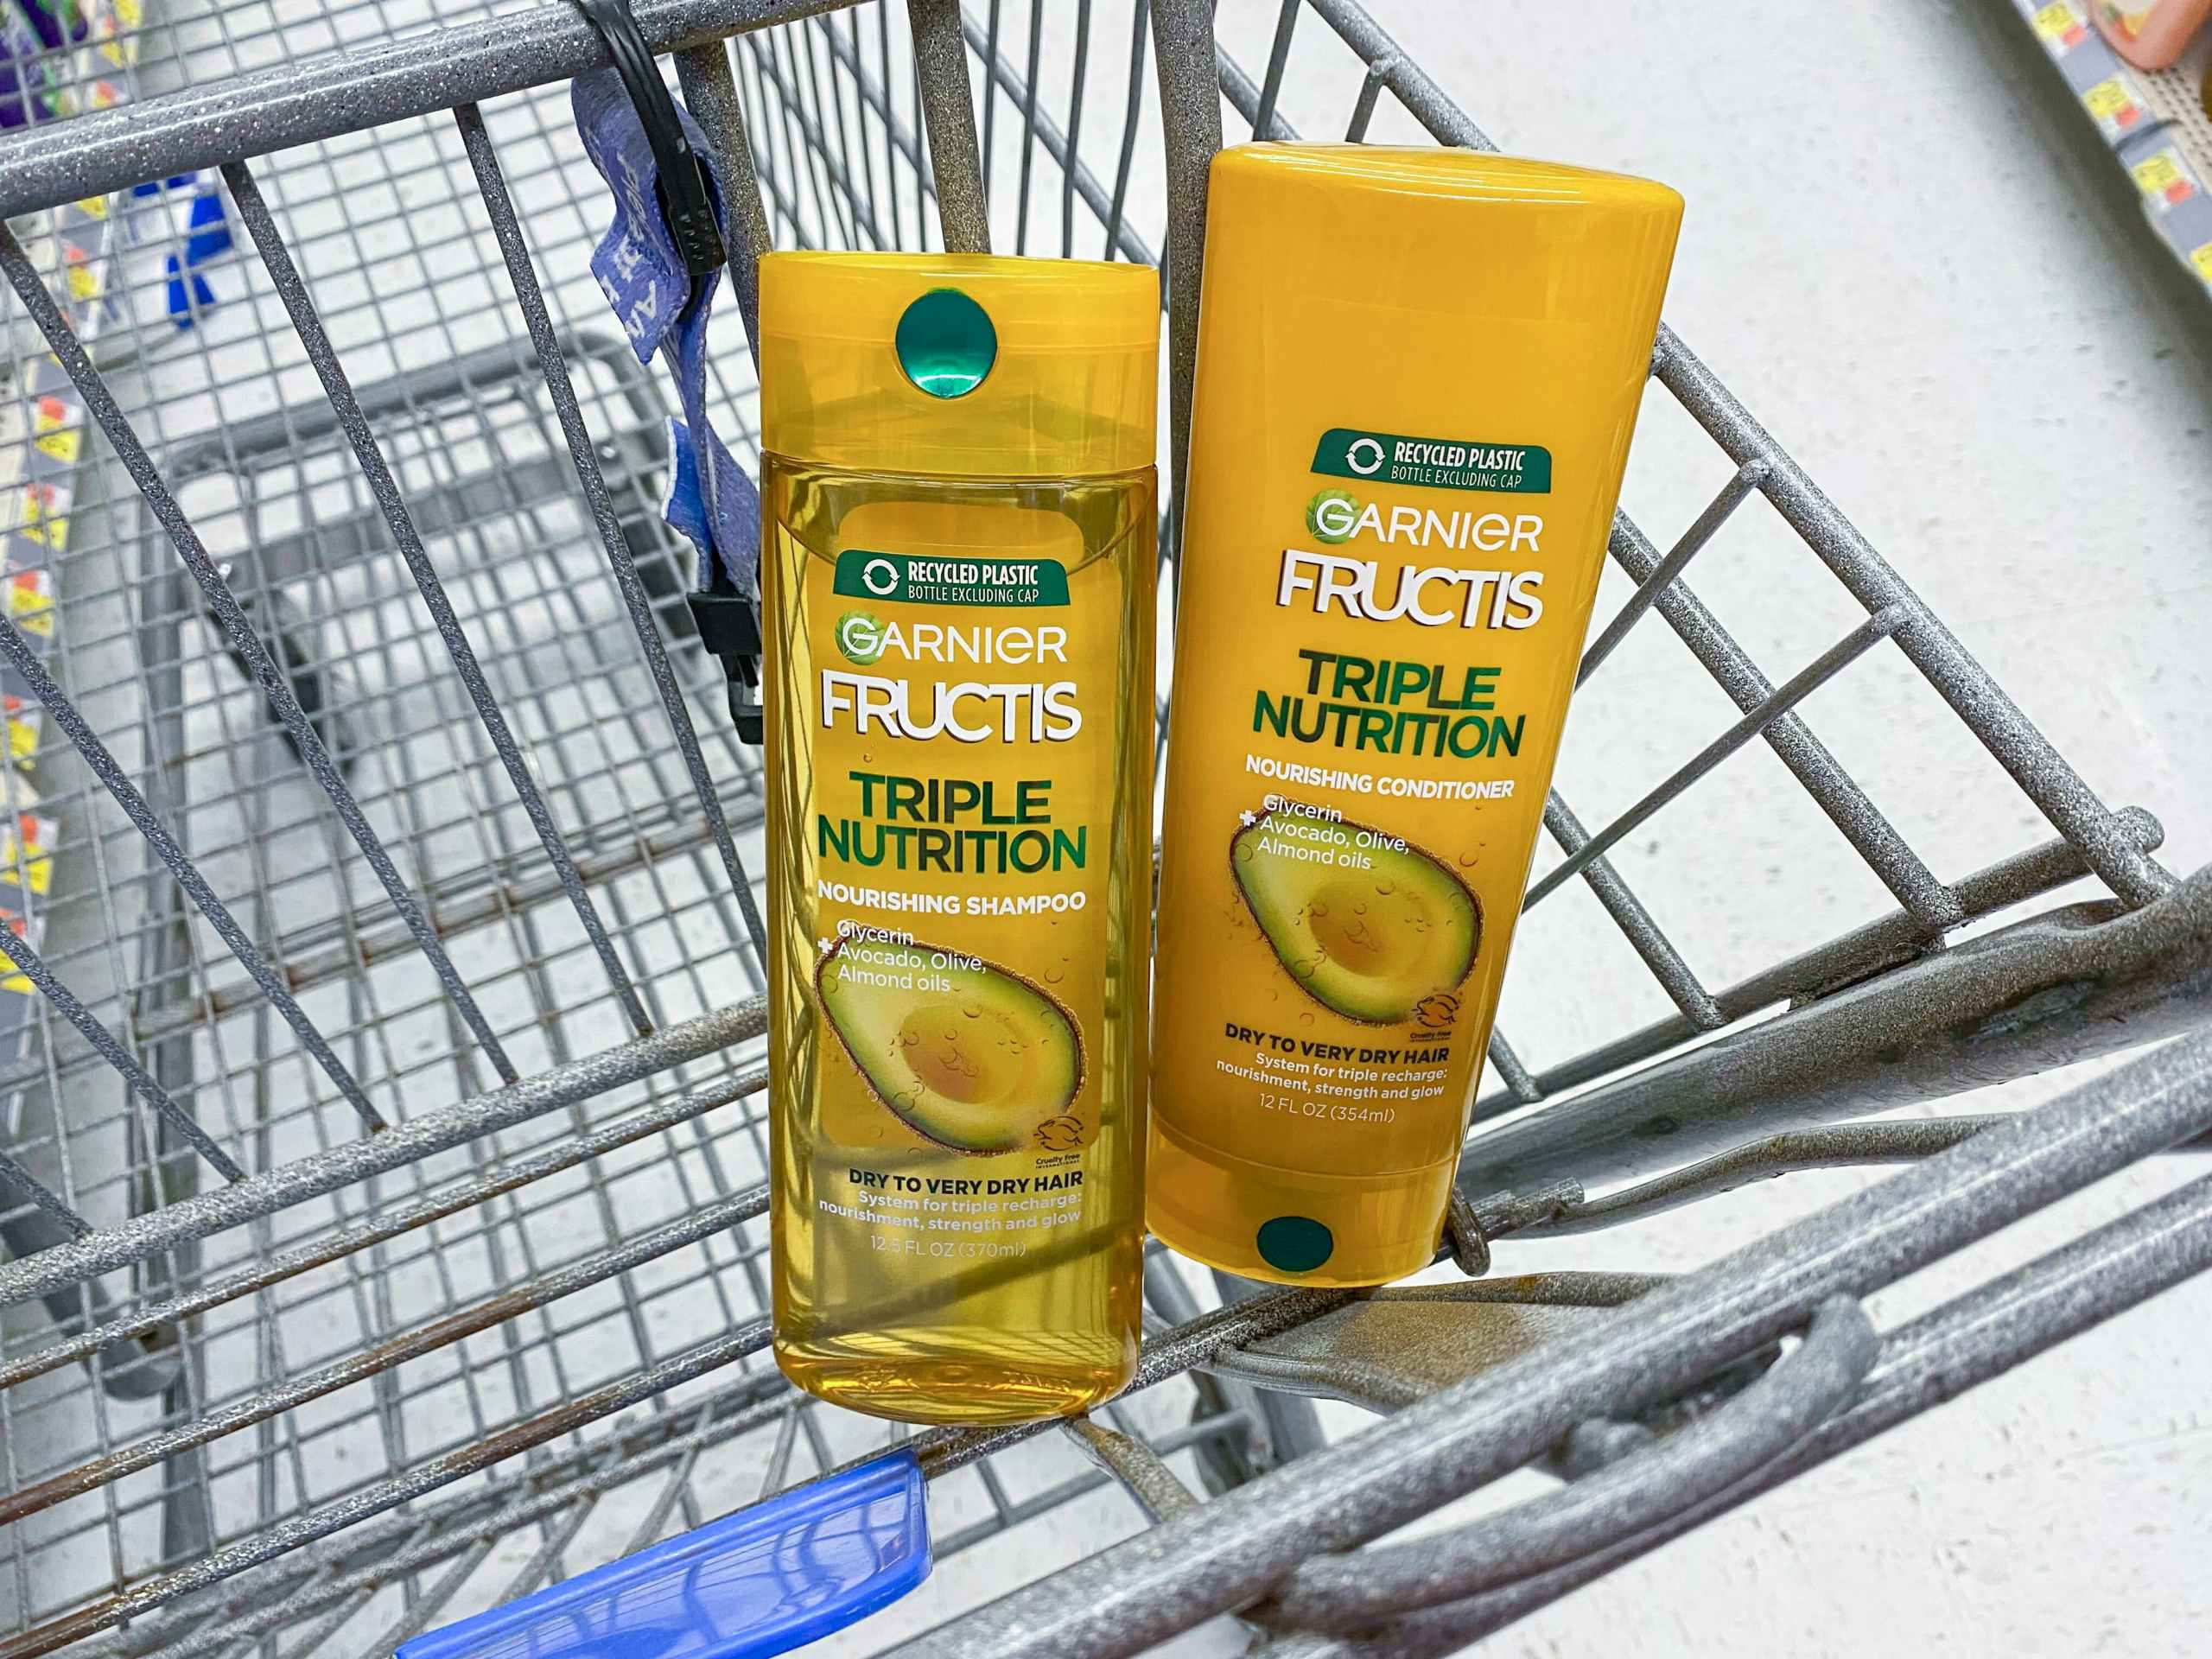 Garnier Fructis Triple Nutrition Shampoo & Conditioner at Walmart